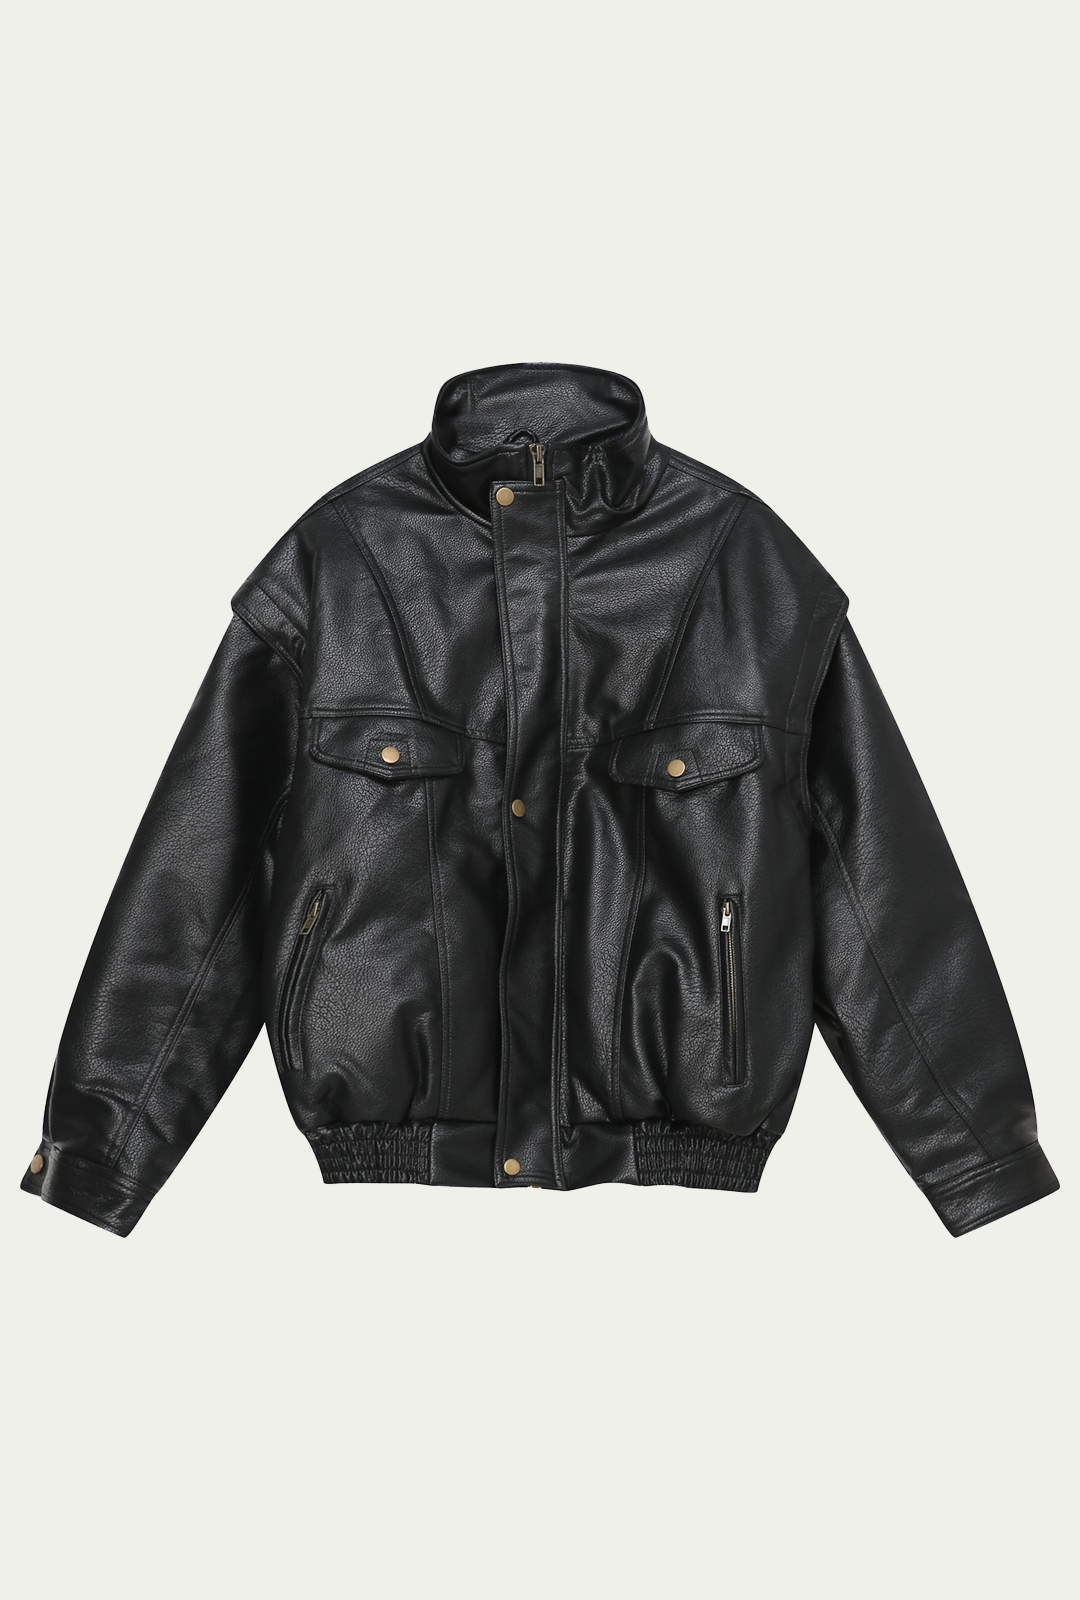 Ramone Taxi Leather Jacket